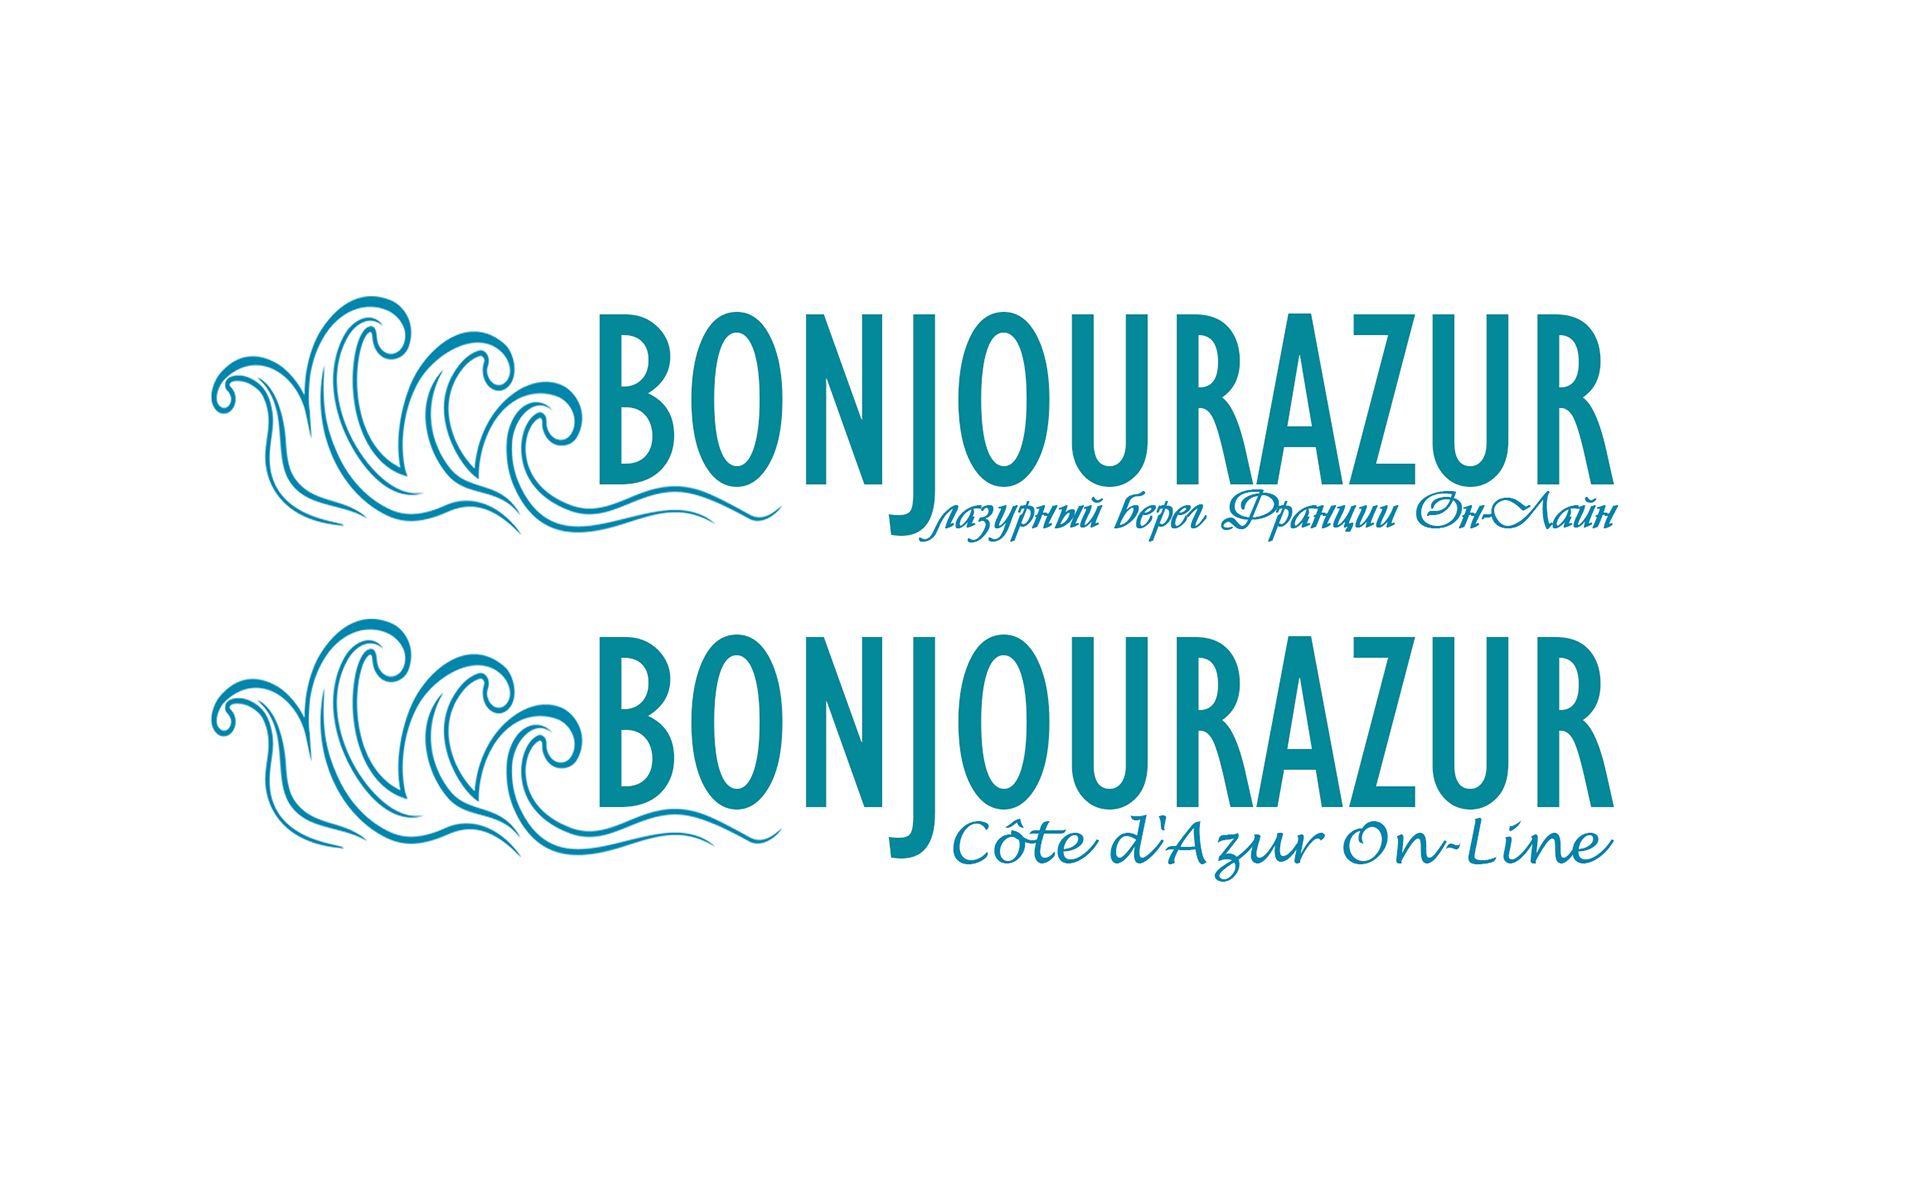 Bonjourazur разработка логотипа портала - дизайнер Lilipysi4ek